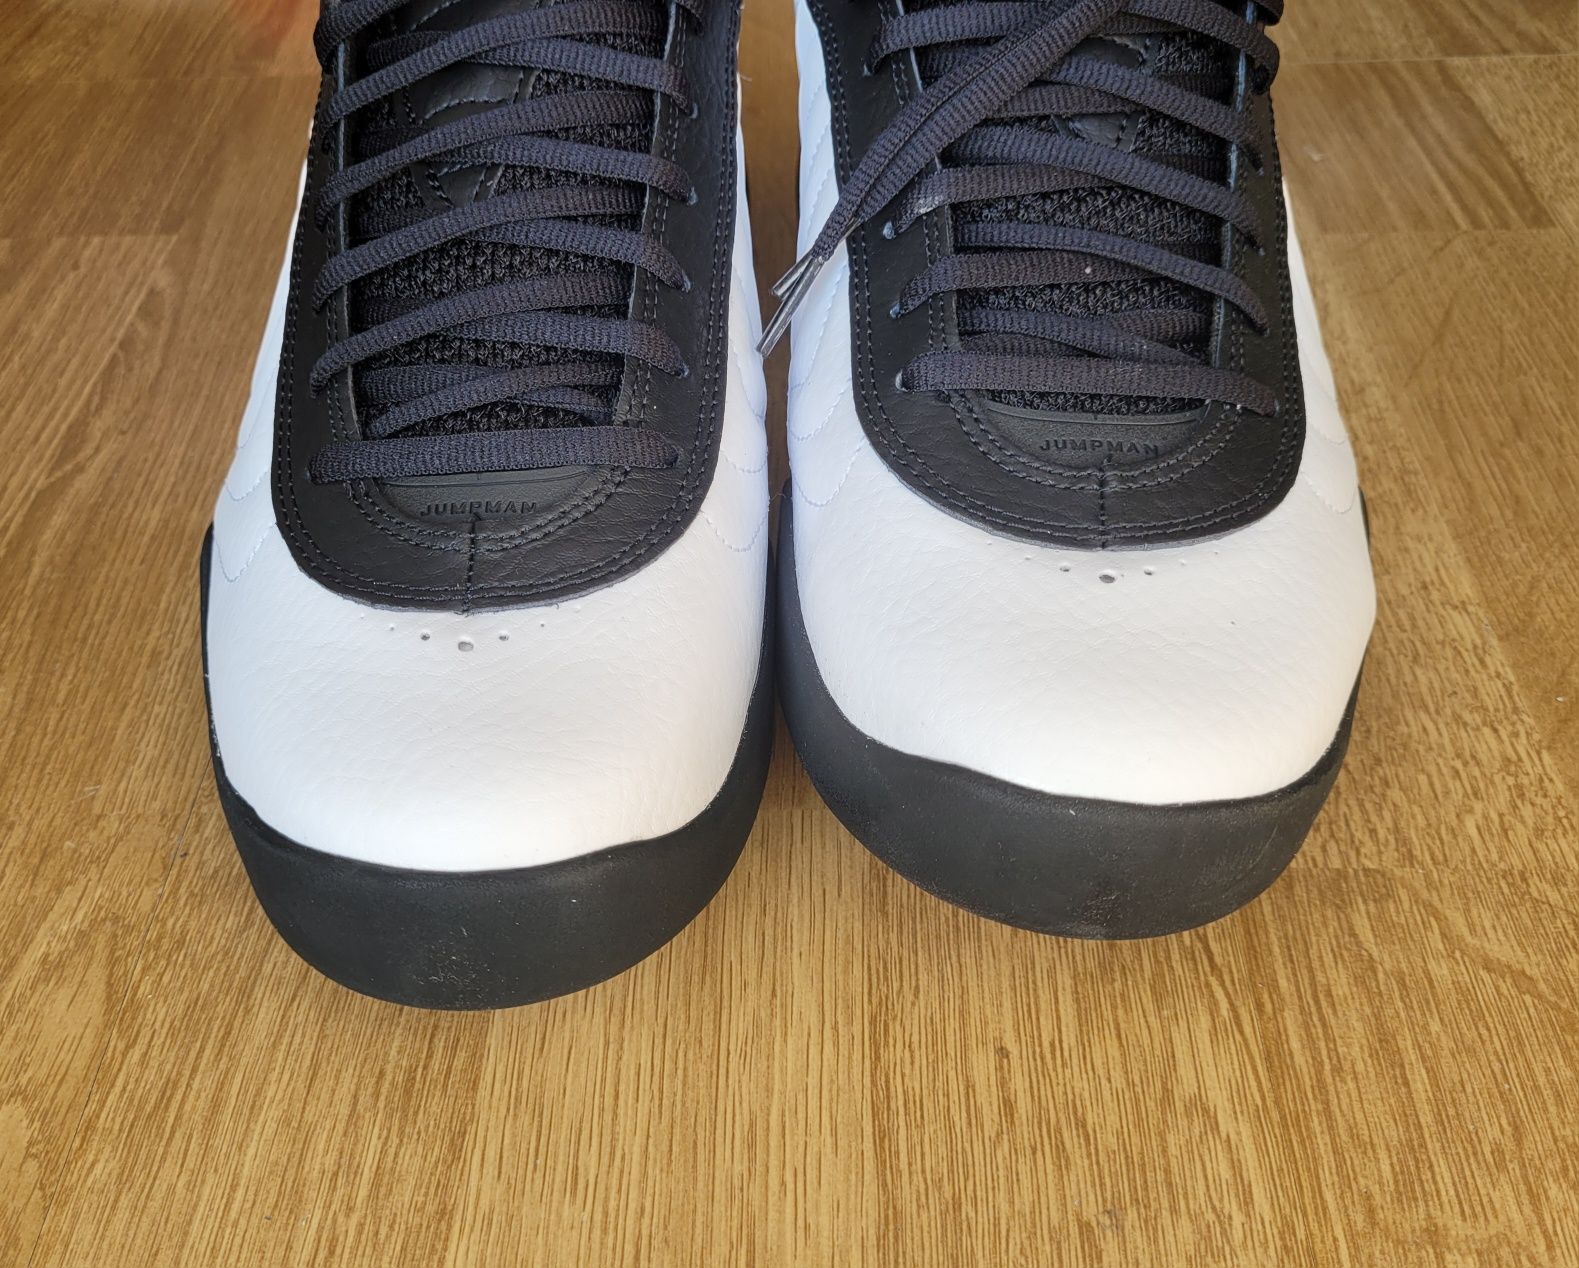 Nowe buty Jordan Jumpman Pro rozmiar 47 czarno-białe